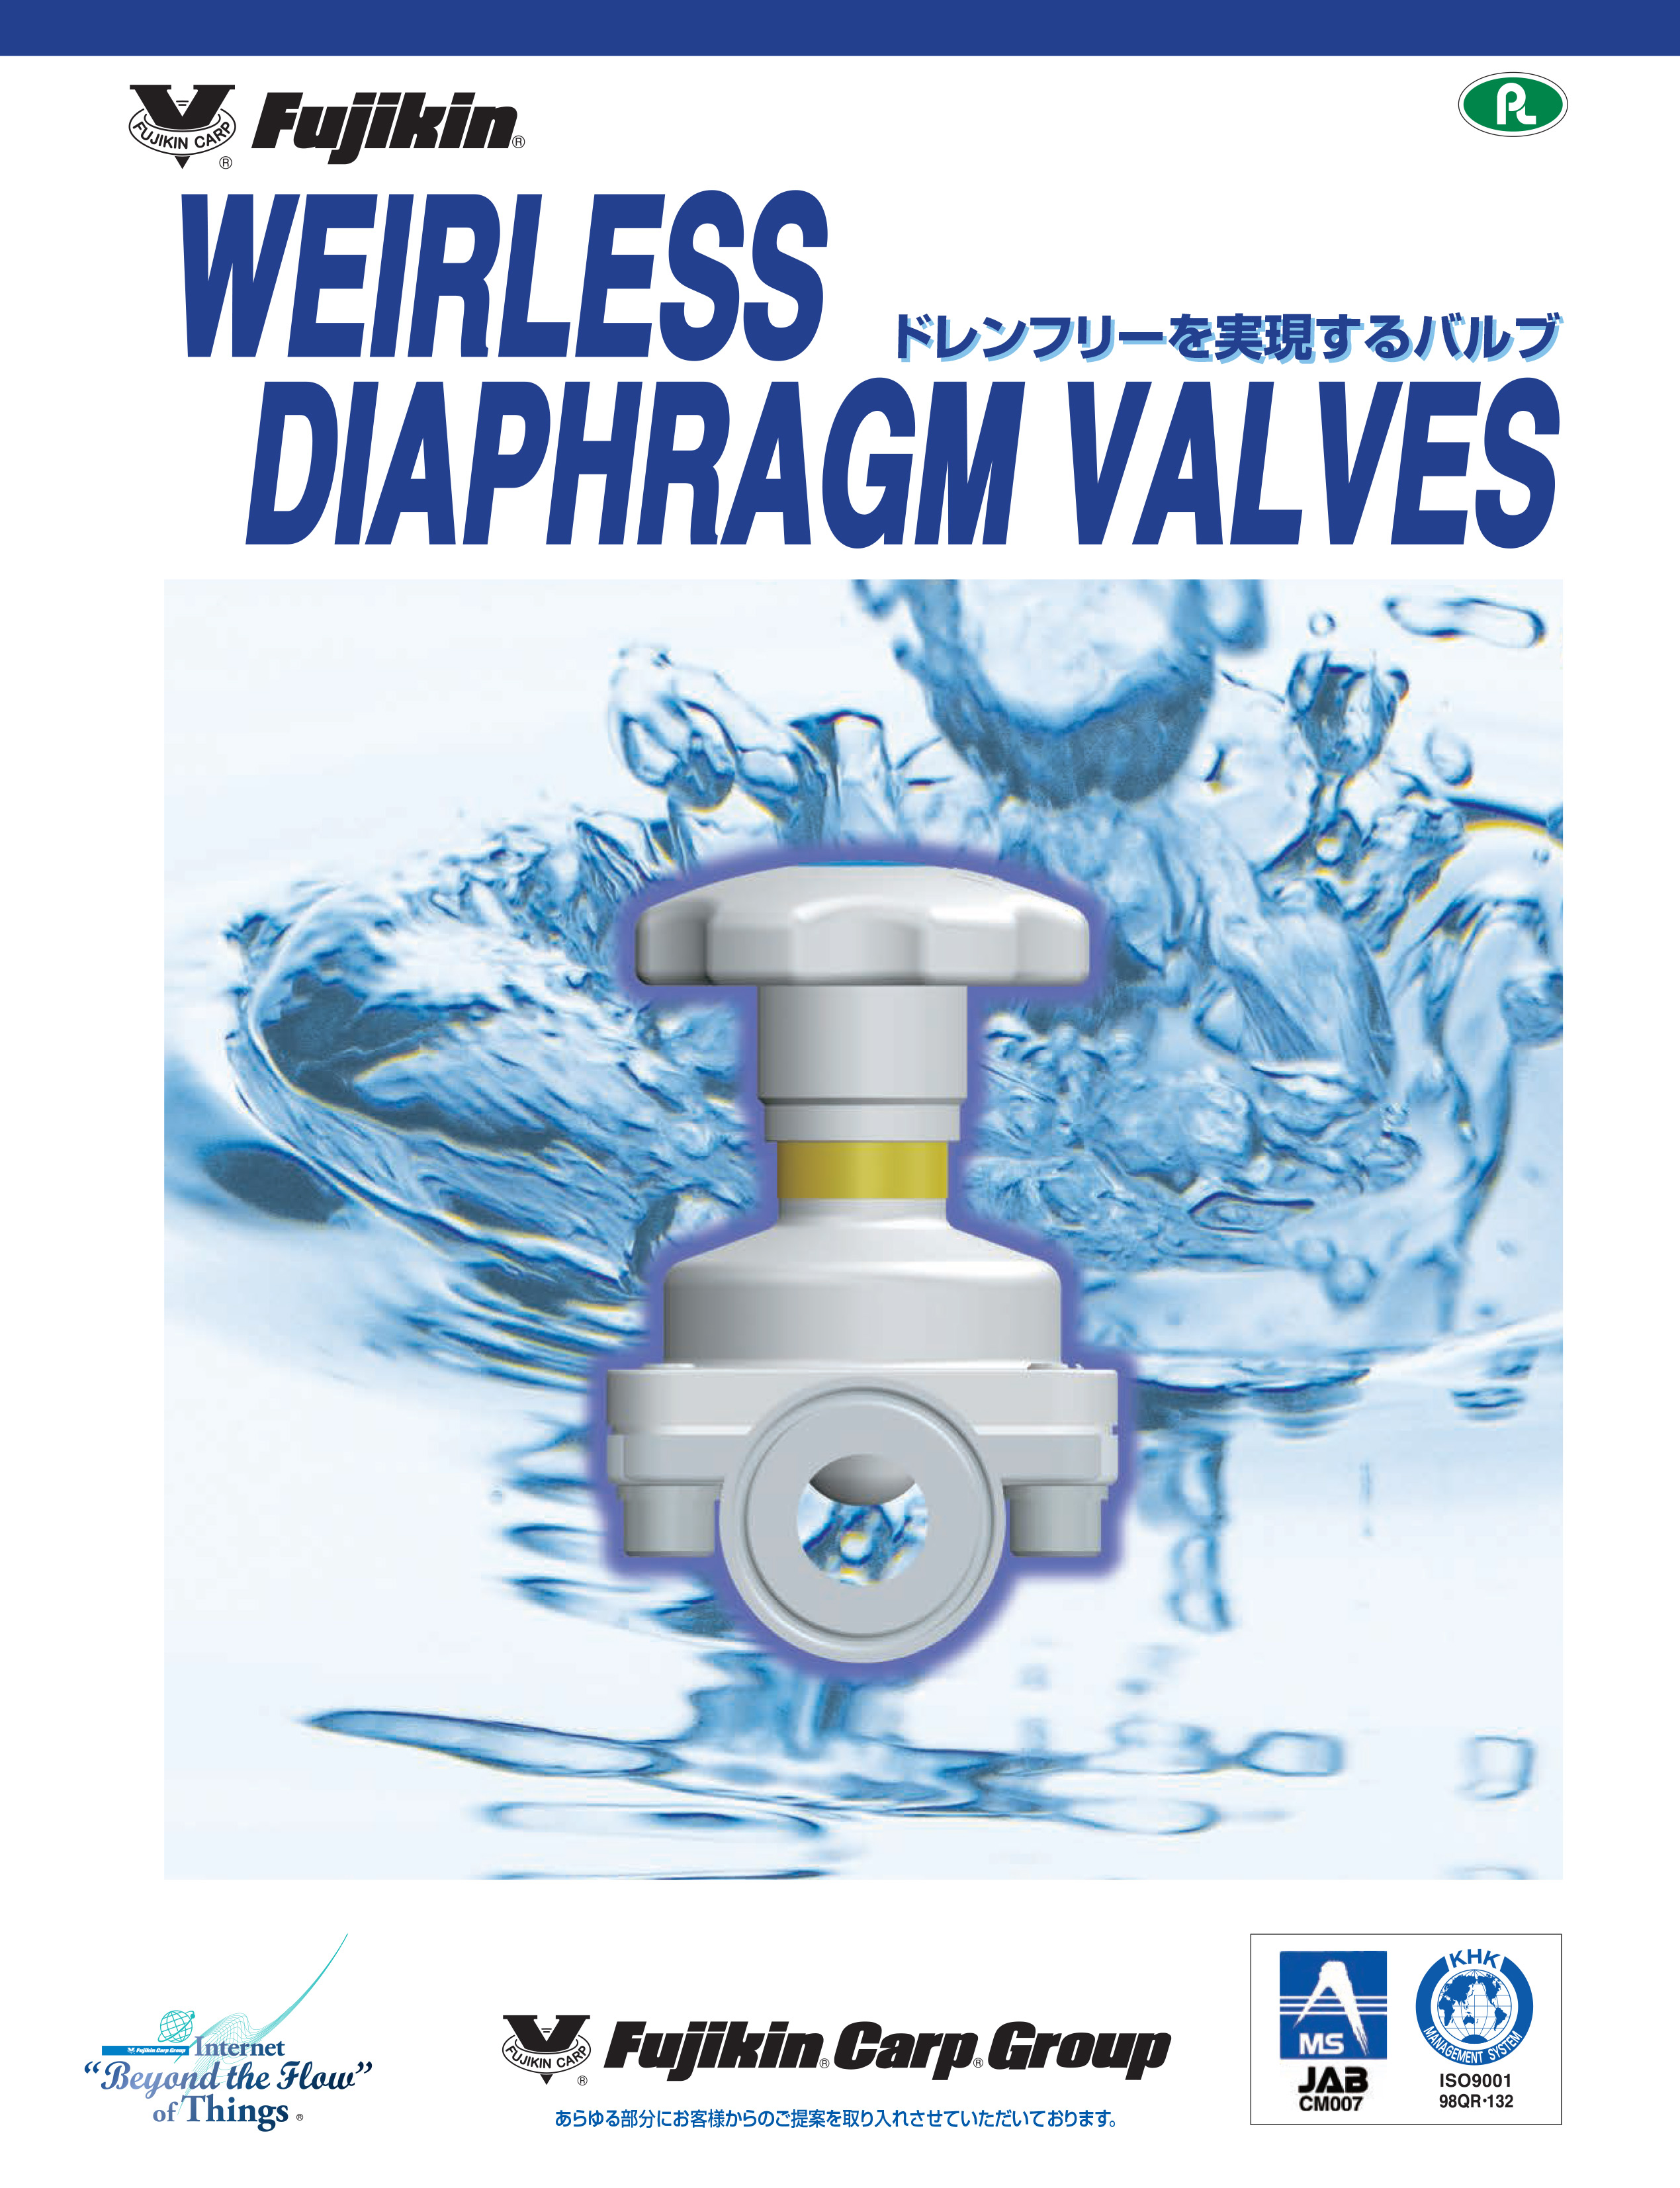 Weirless Diaphragm Valves